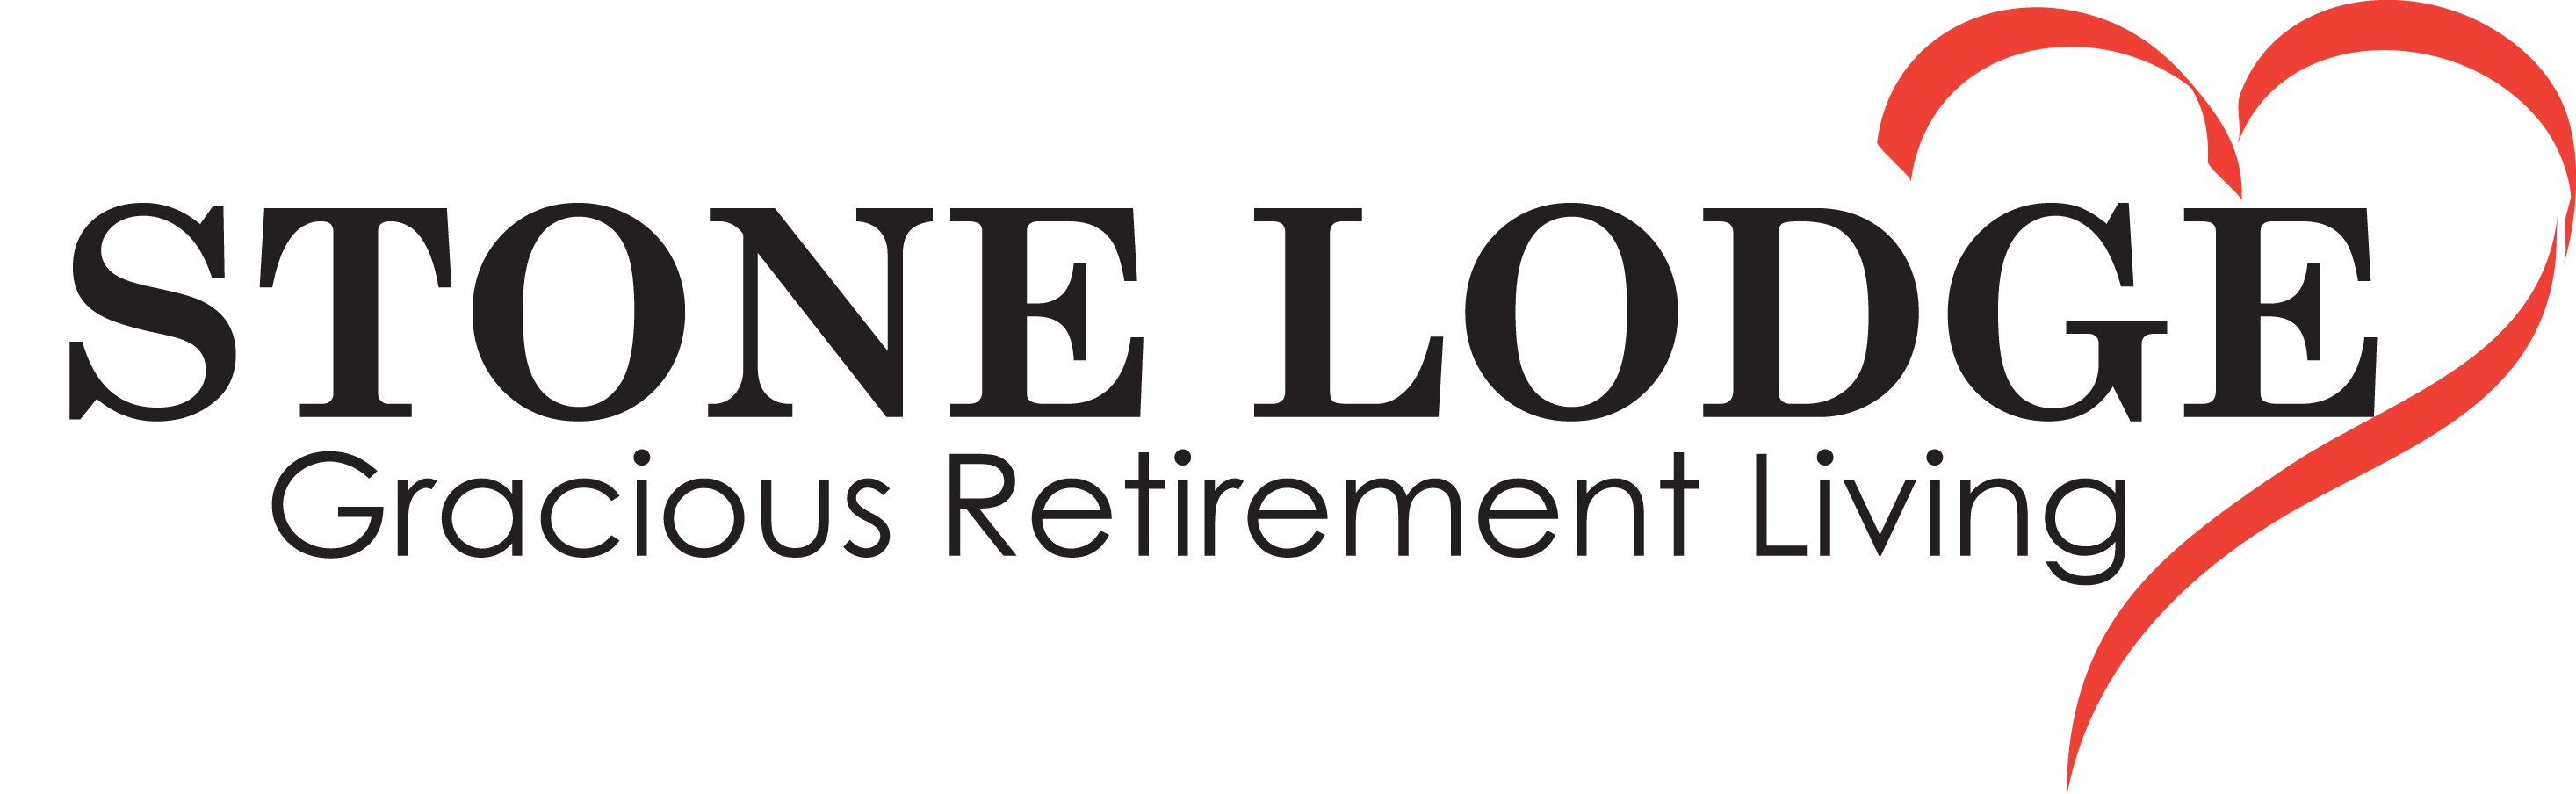 Stone Lodge logo